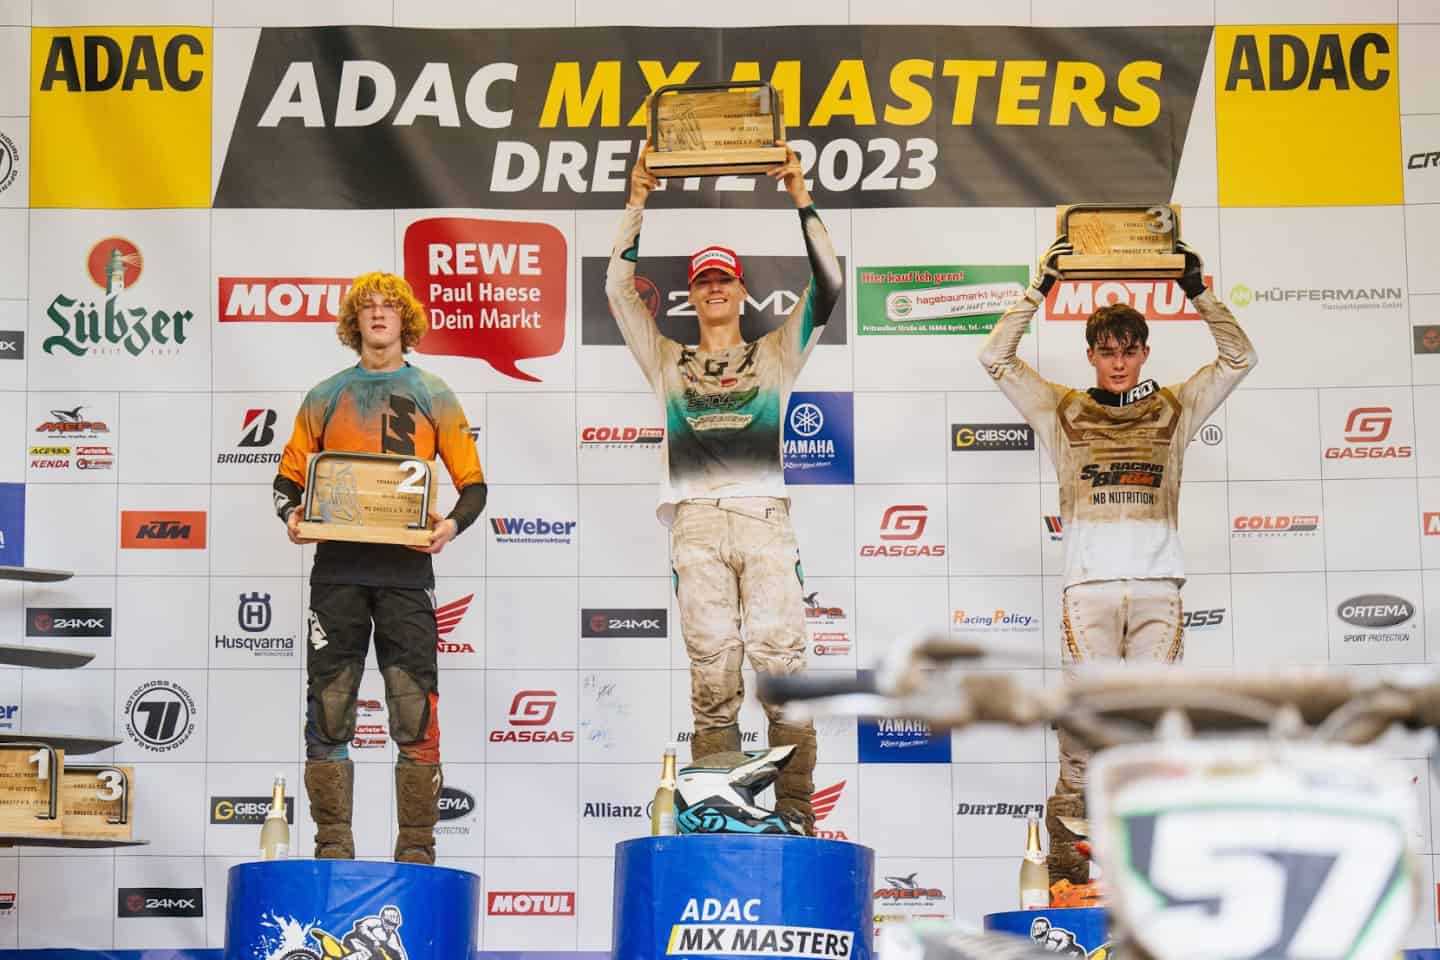 PM SixtySeven Racing - ADAC MX Masters in Dreetz